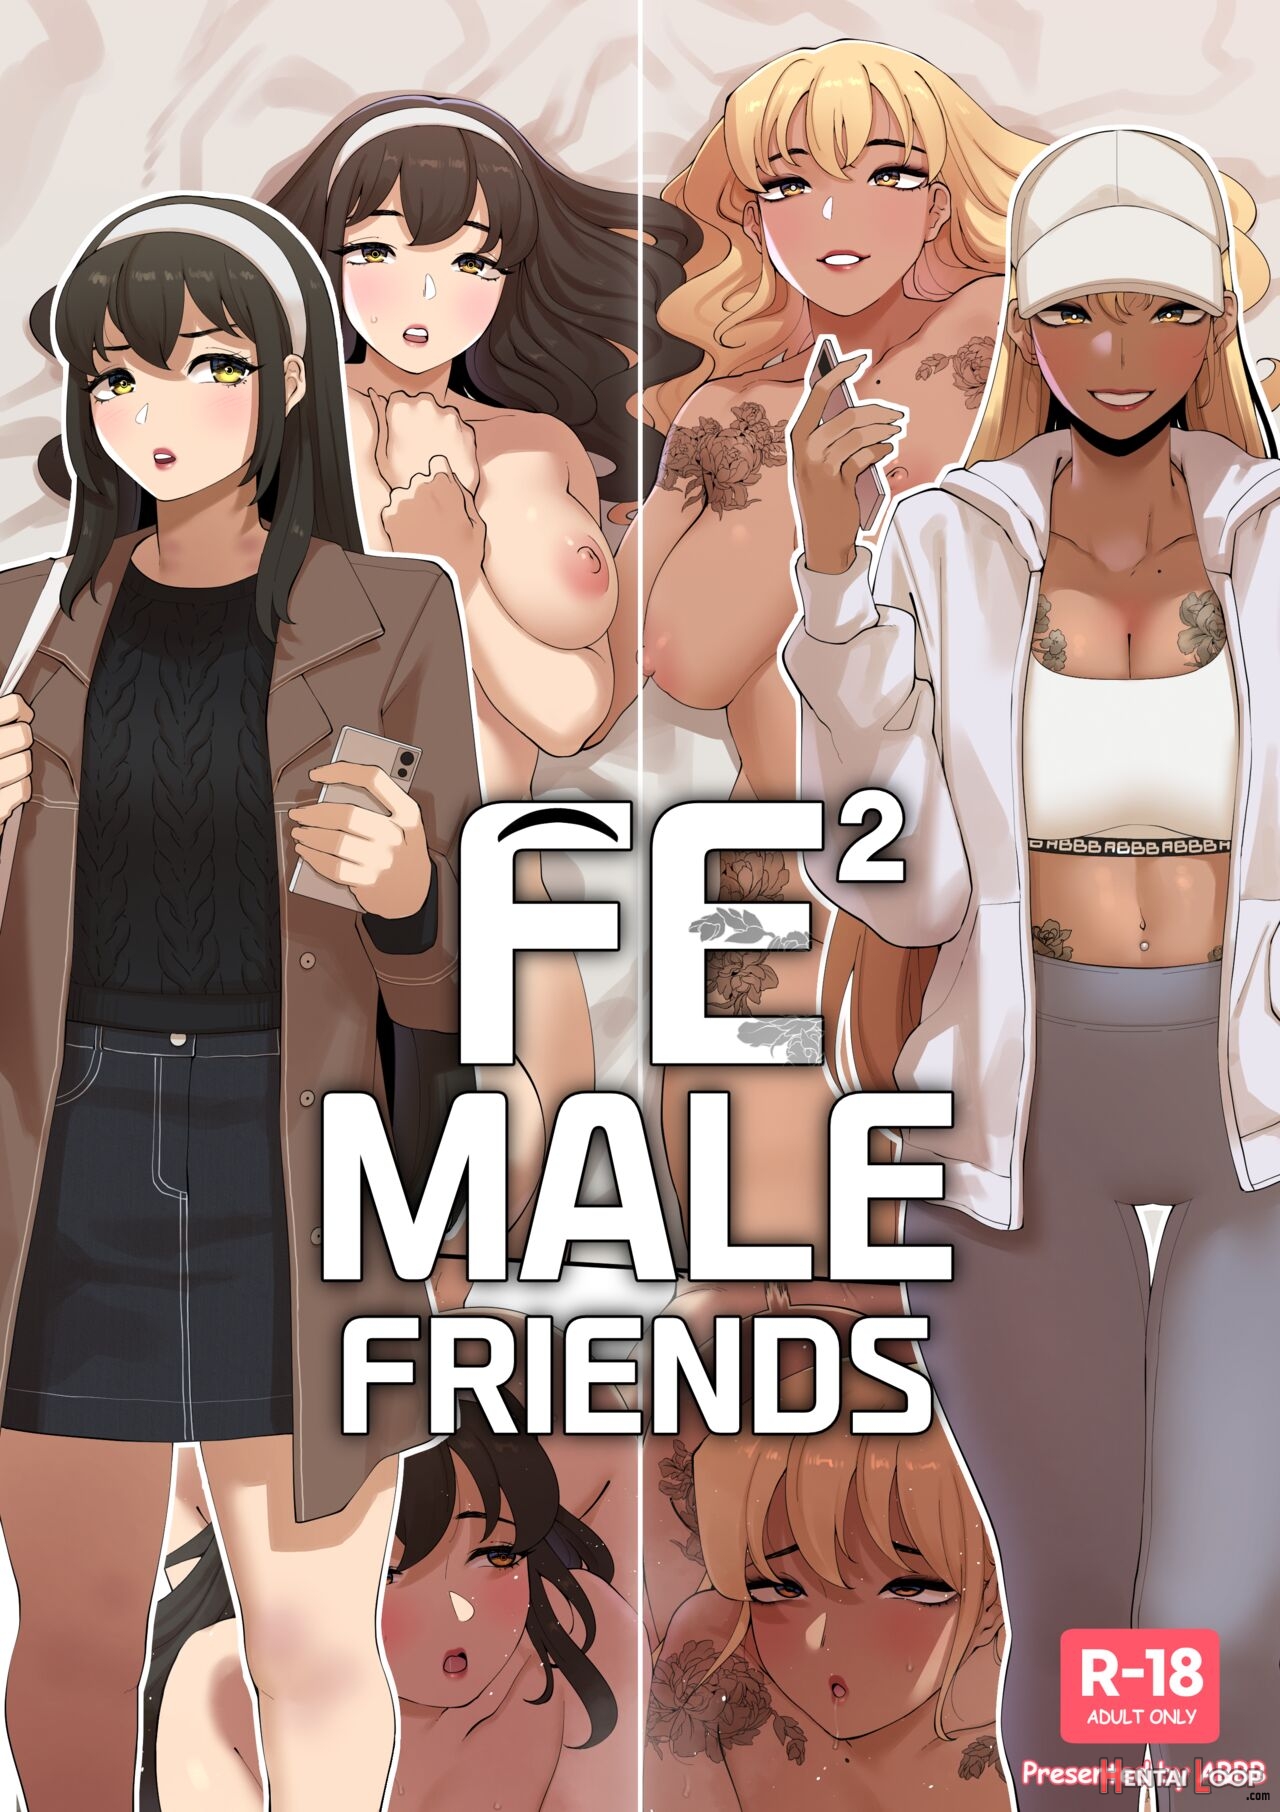 Fe²male Friends page 1